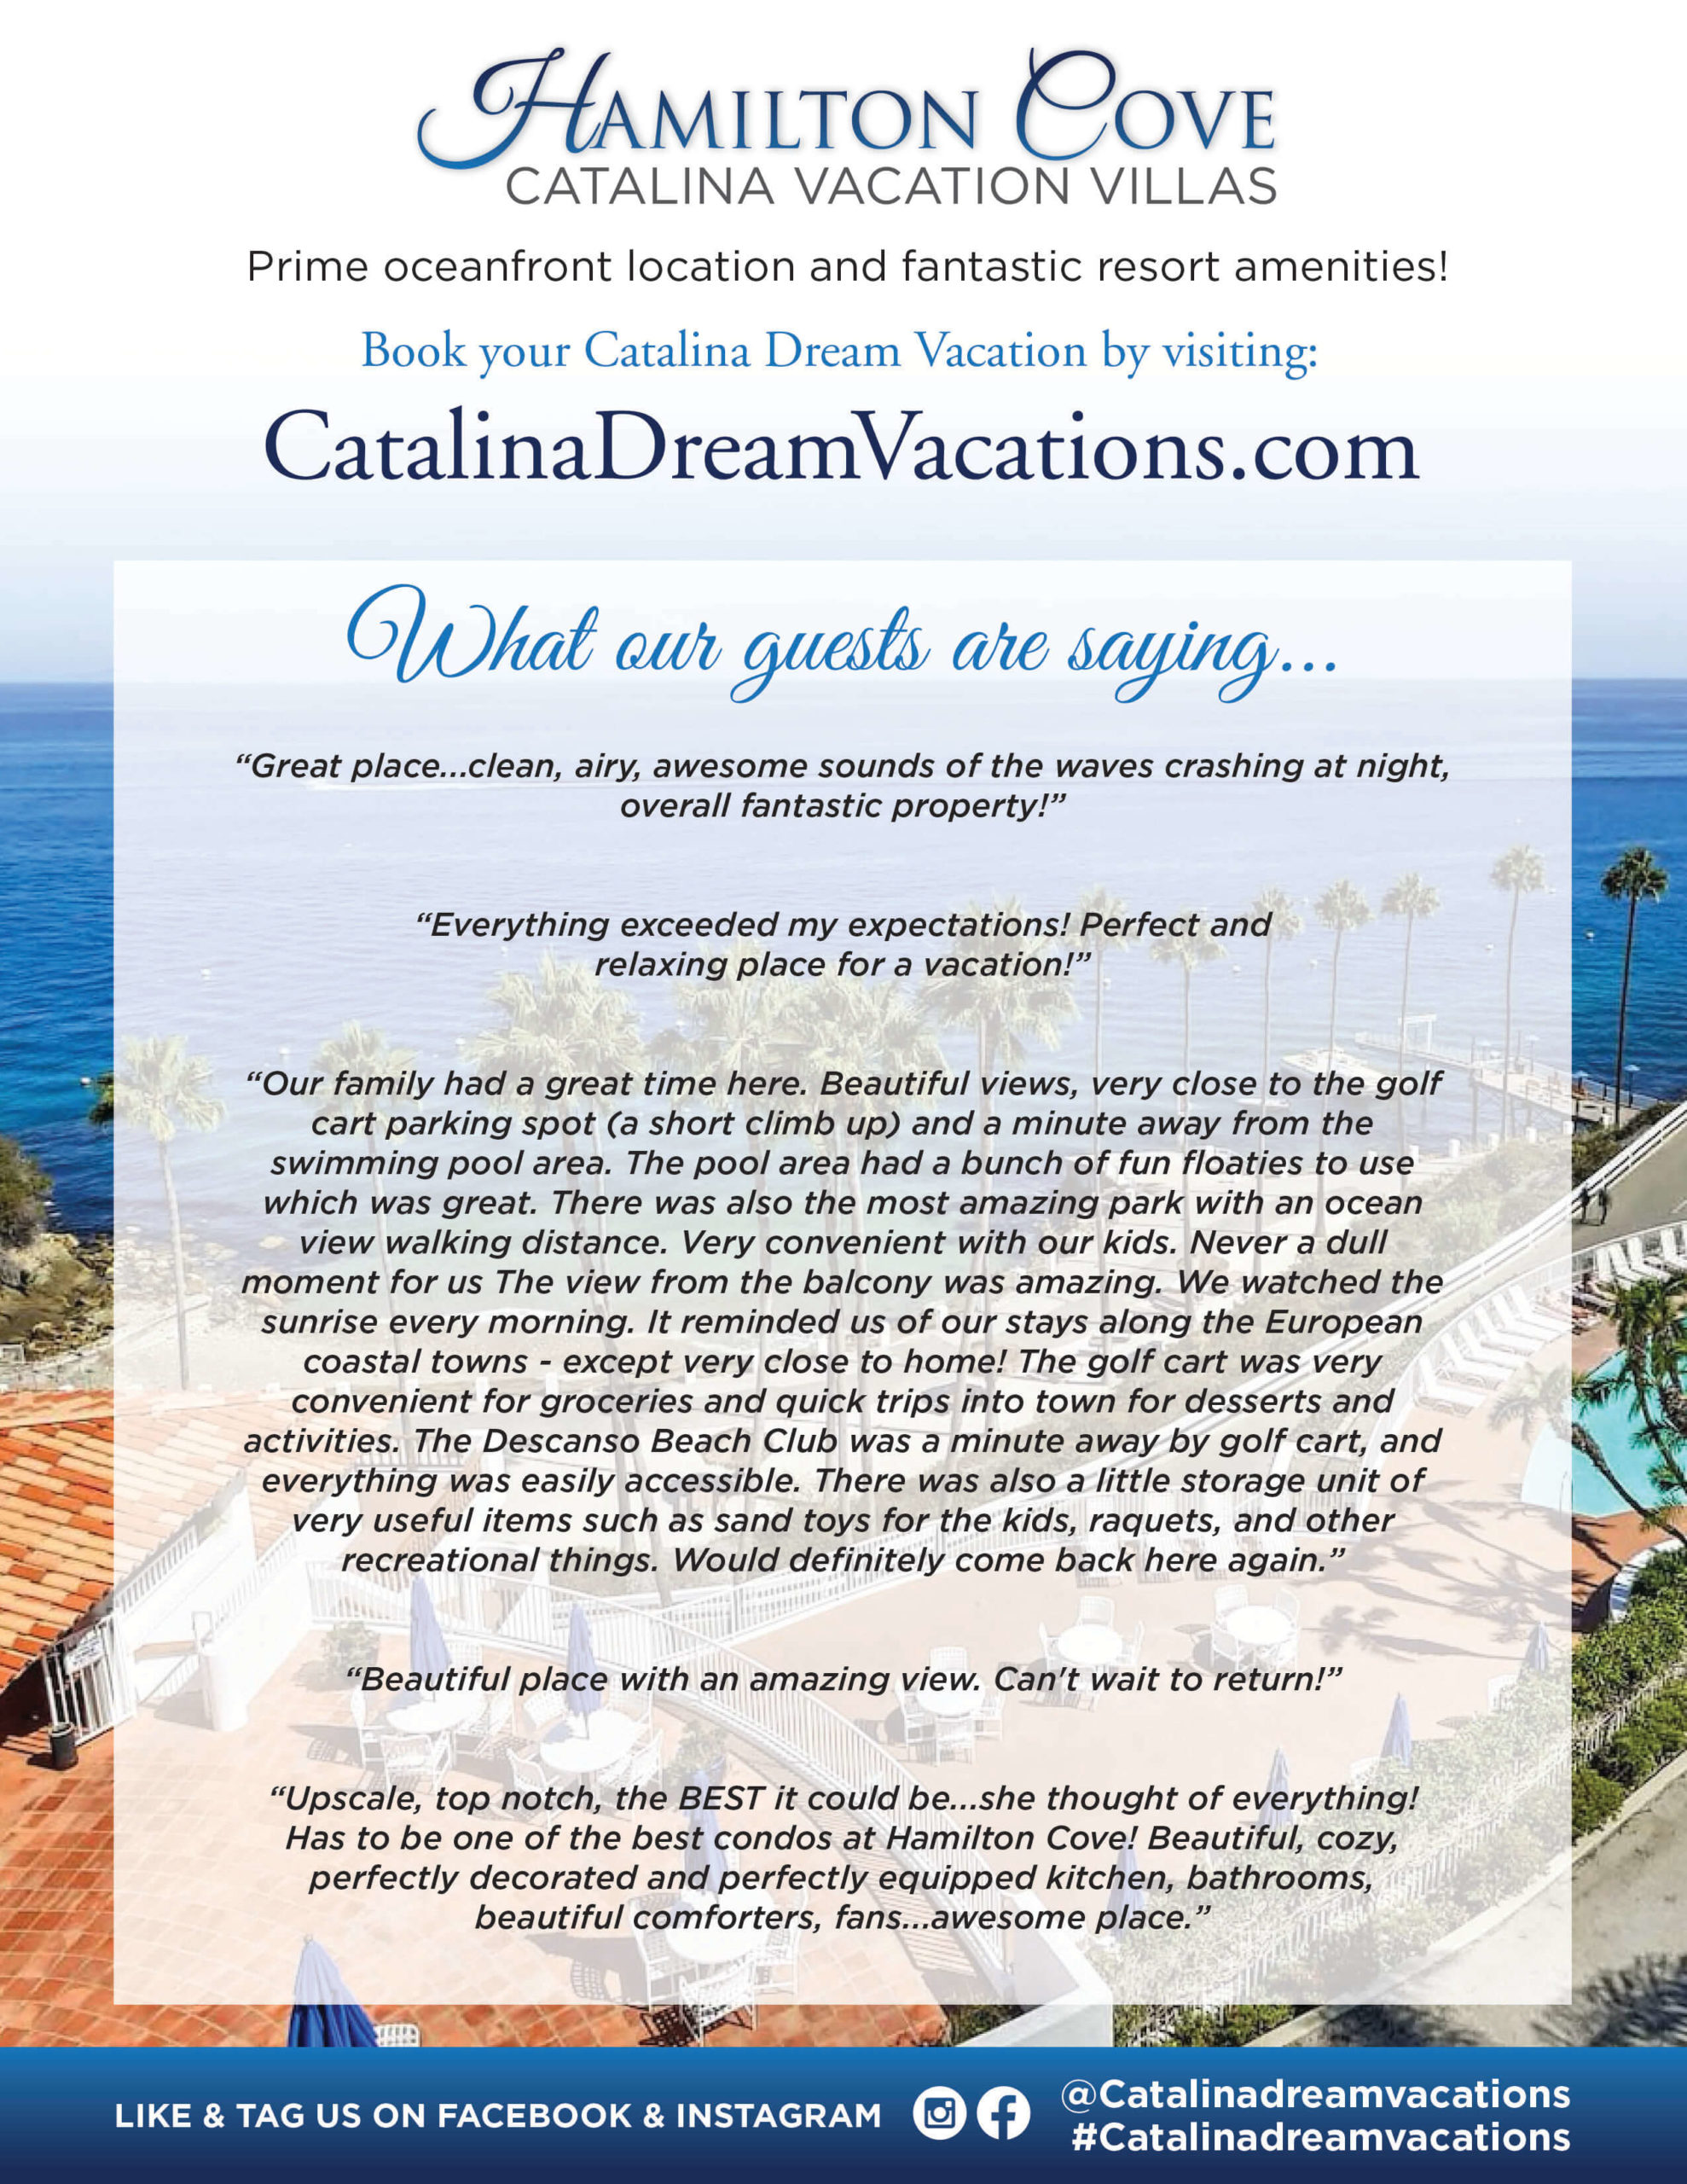 Hamilton Cove - Catalina Dream Vacations reviews